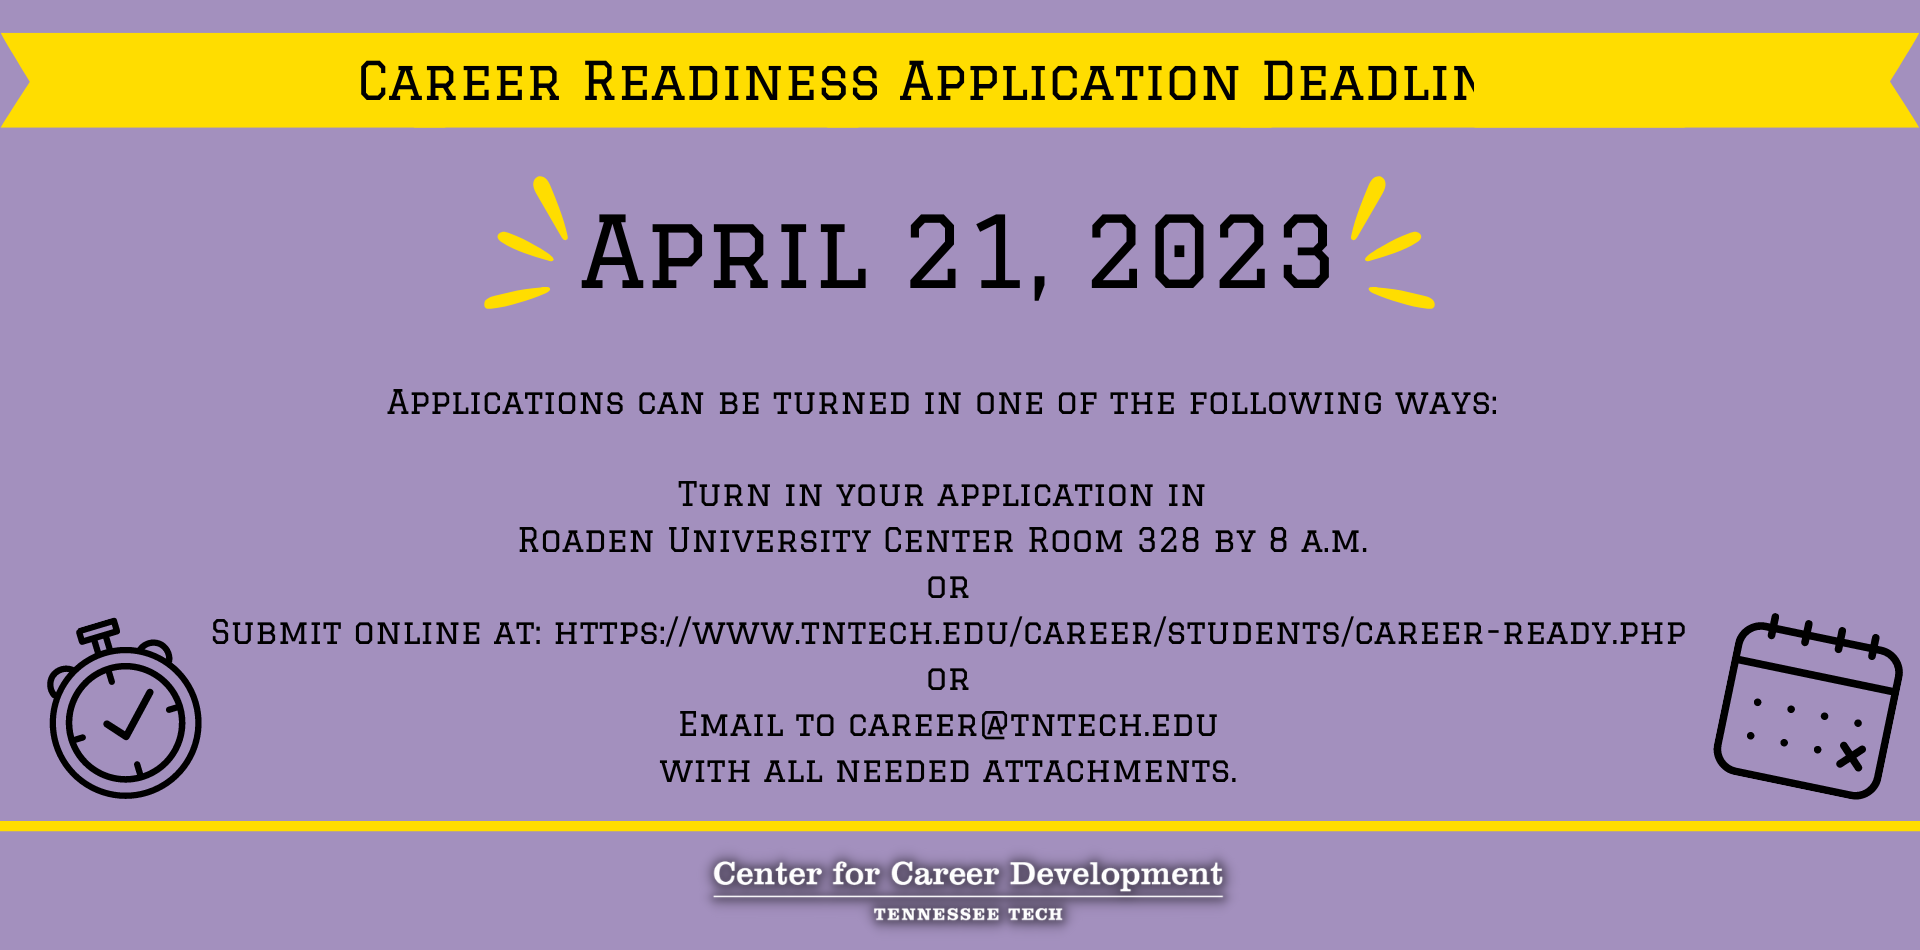 Career Readiness Application Deadline is April 21, 2023